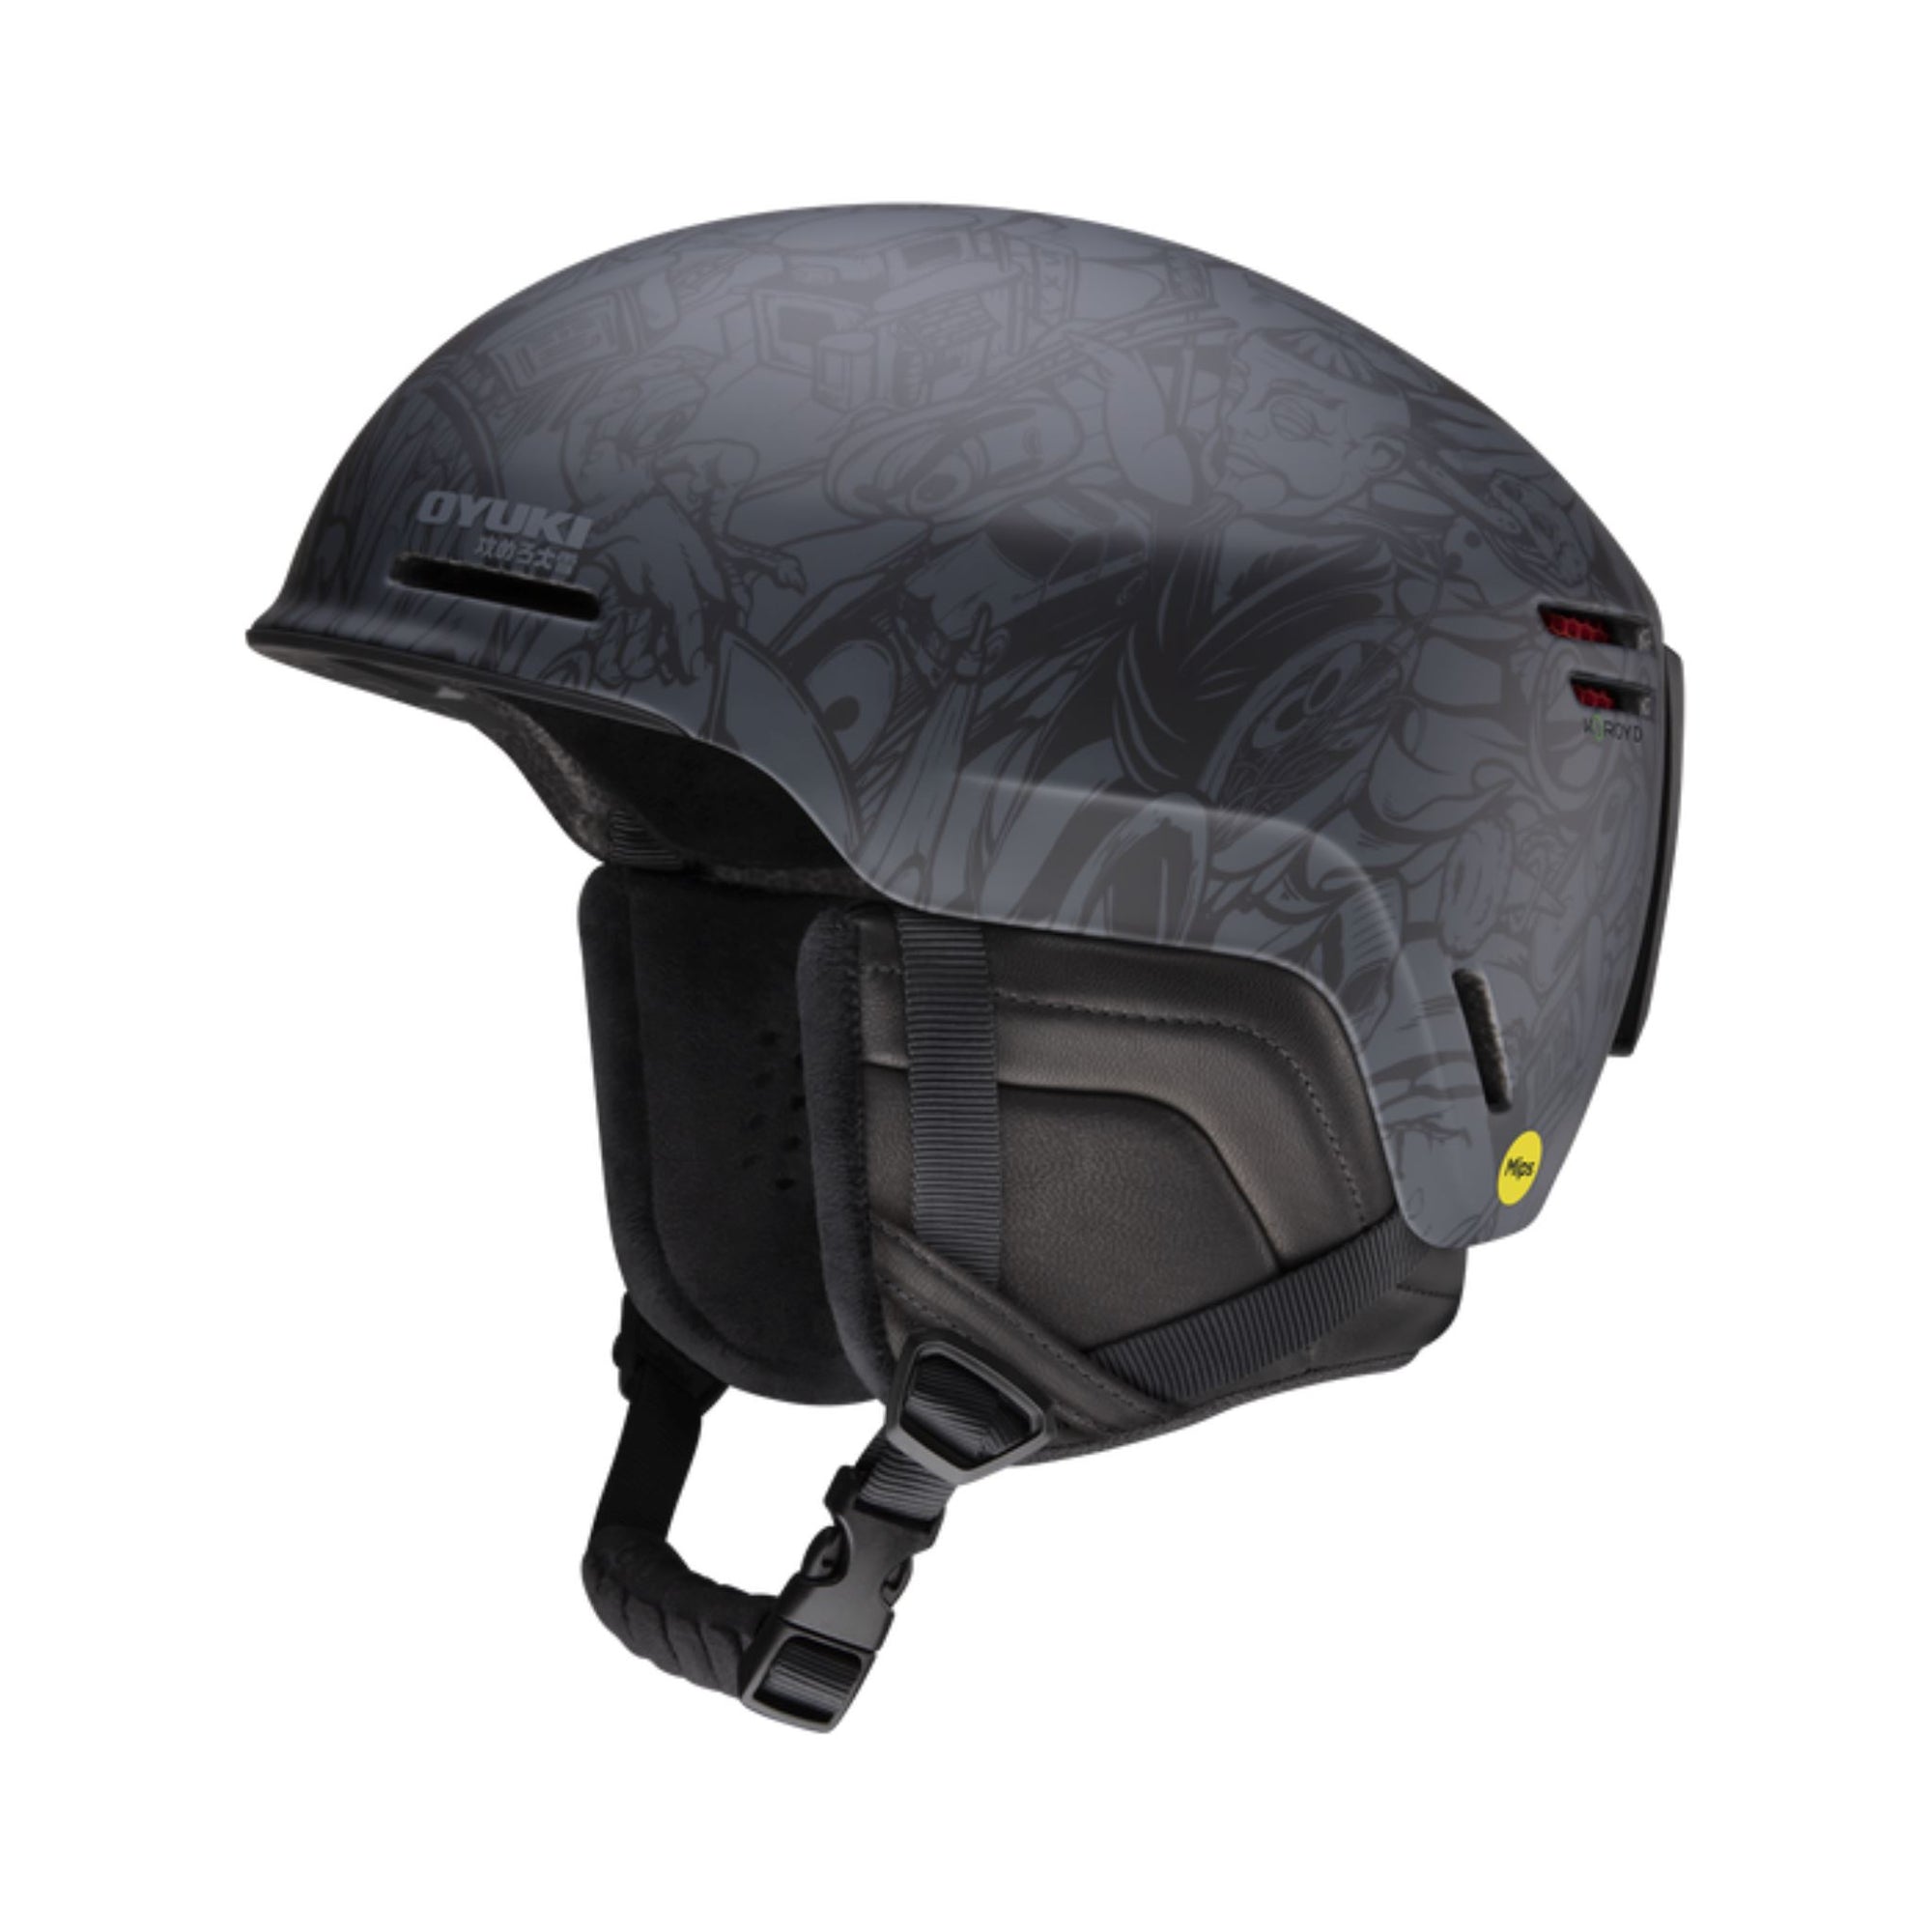 Smith Method MIPS Helmet - Matte Oyuki X Smith Helmets Smith S - (51-55CM) 